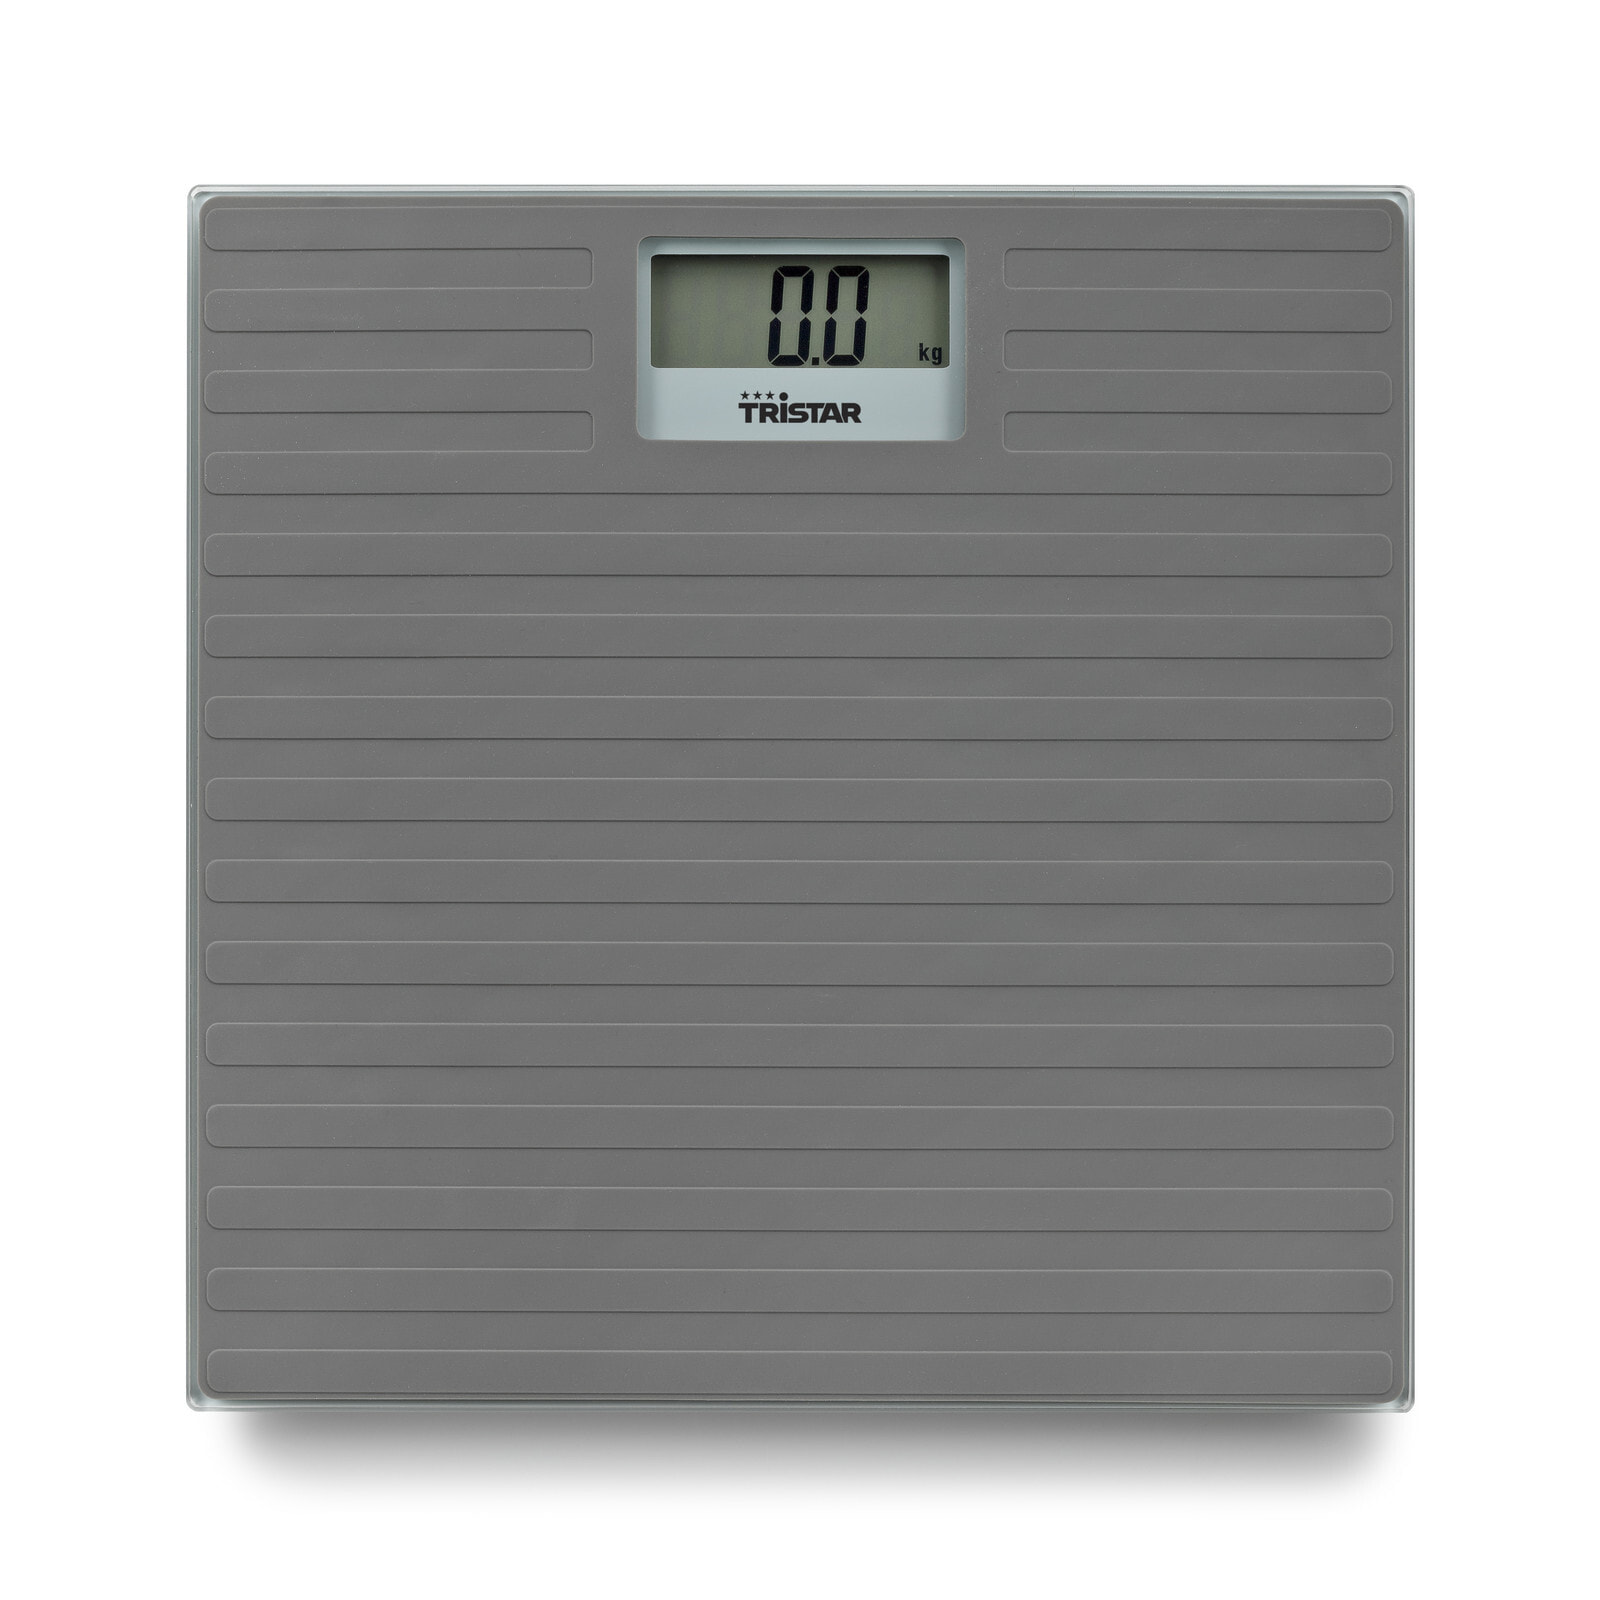 Tristar WG-2431 домашние весы Квадратный Серый Персональные электронные весы